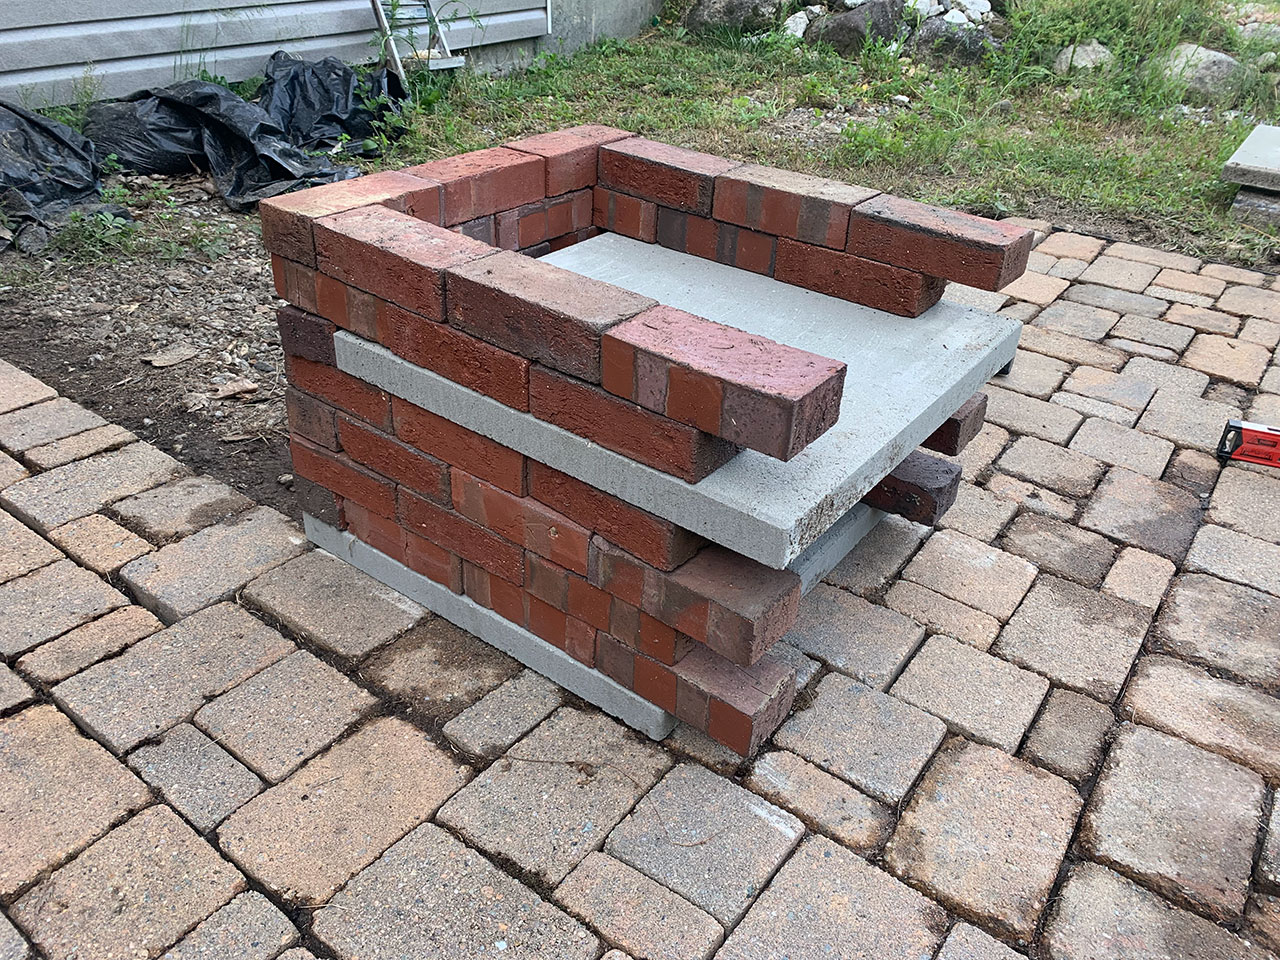 Final layer of bricks